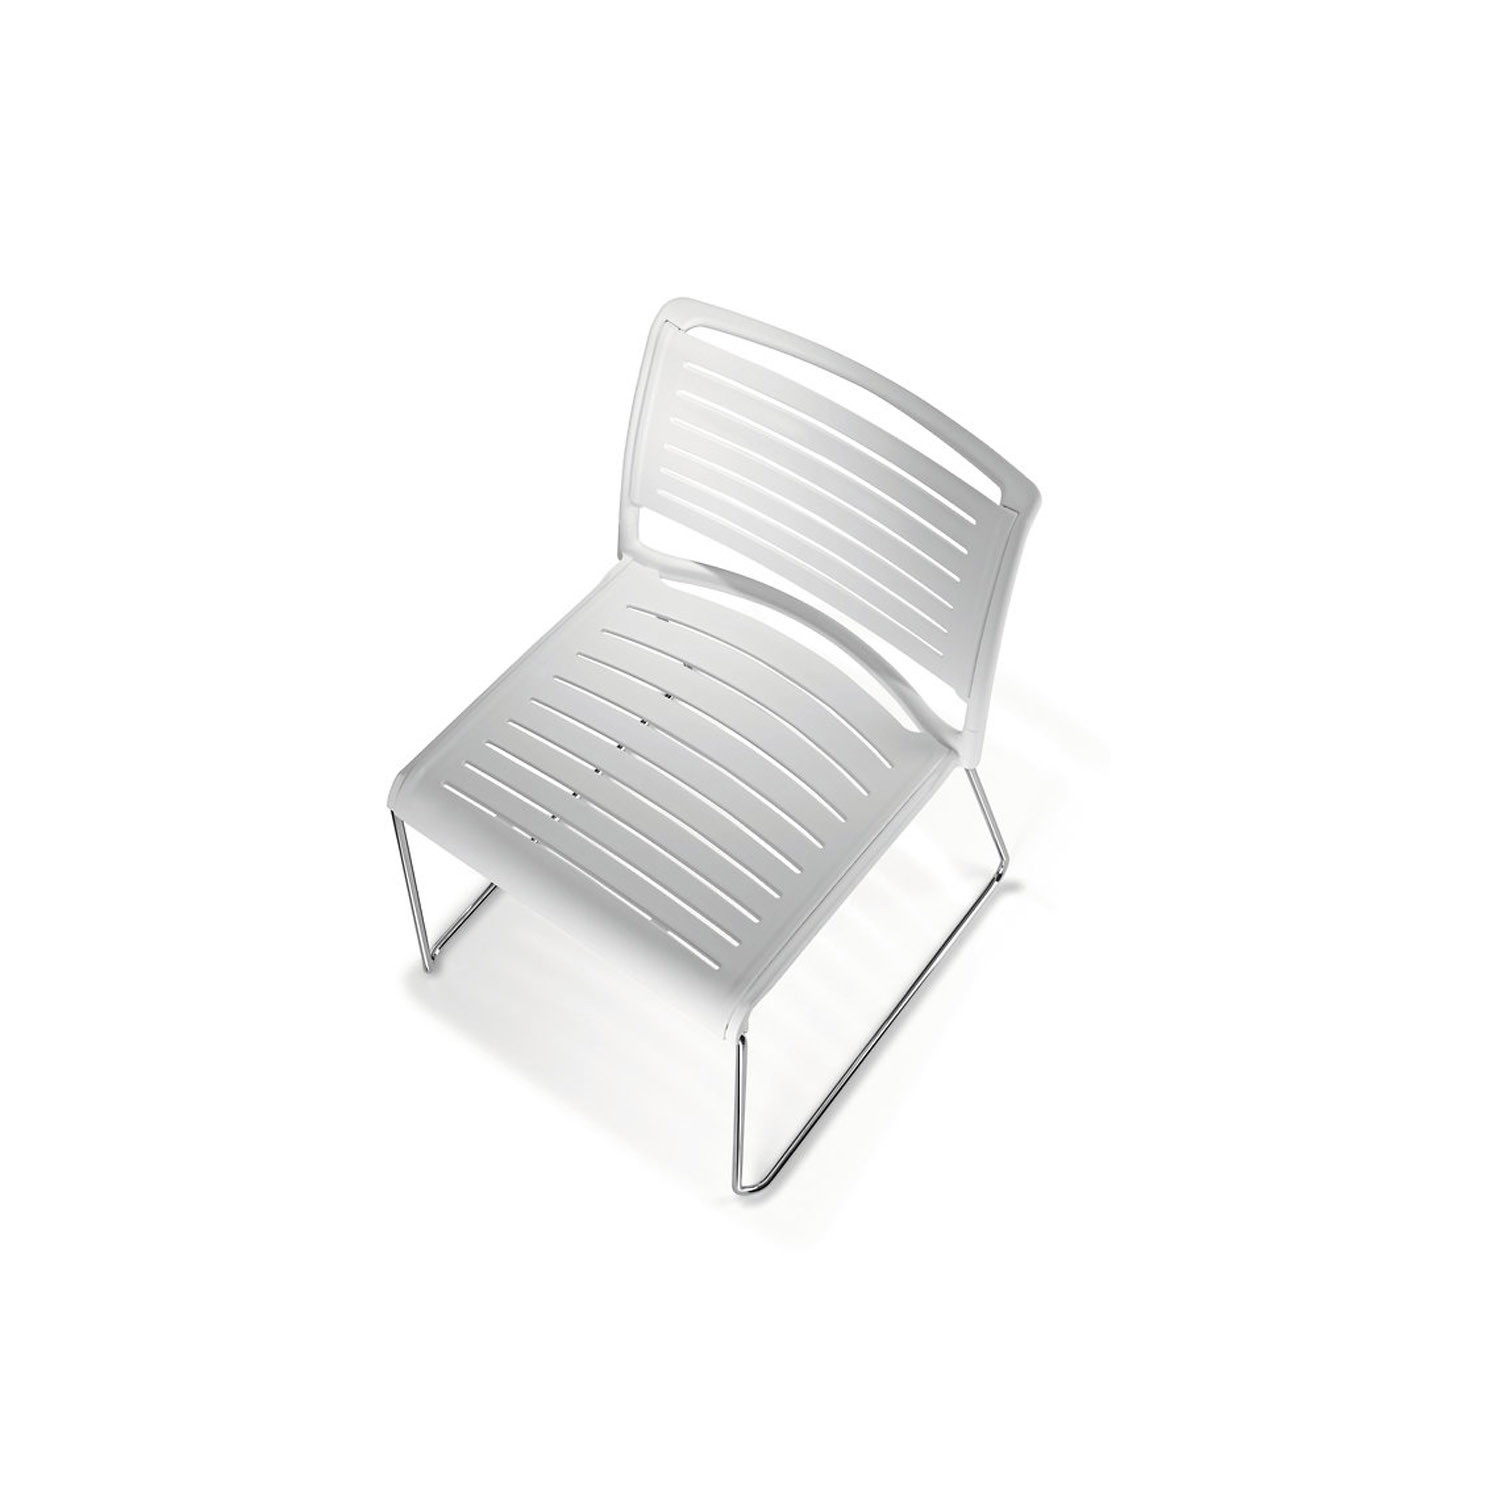 Aline-S Chair by Wilkhahn